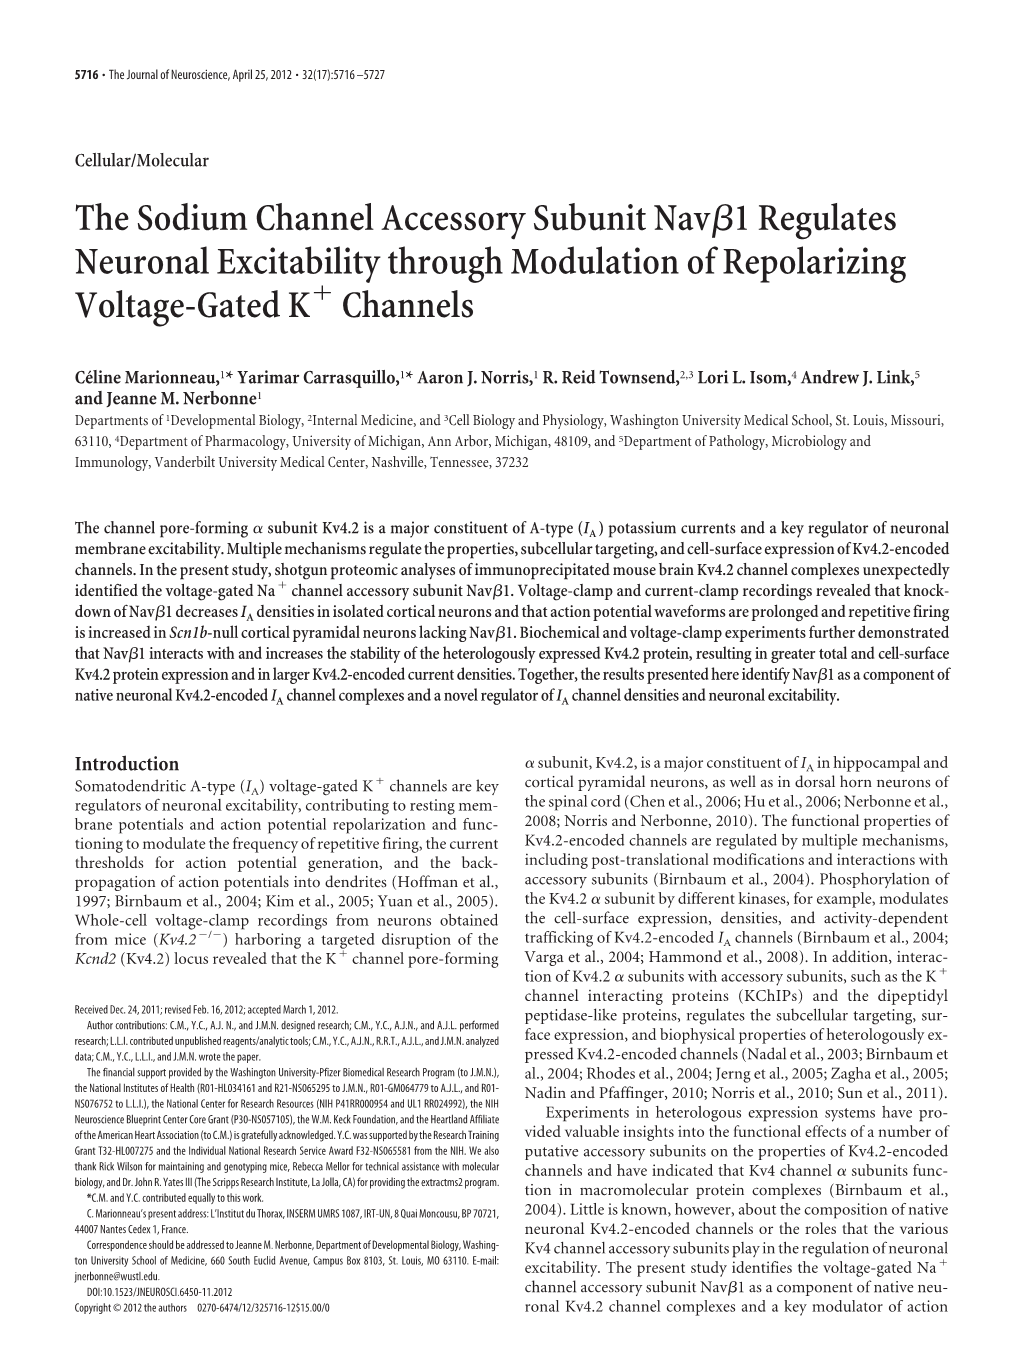 The Sodium Channel Accessory Subunit Nav 1 Regulates Neuronal